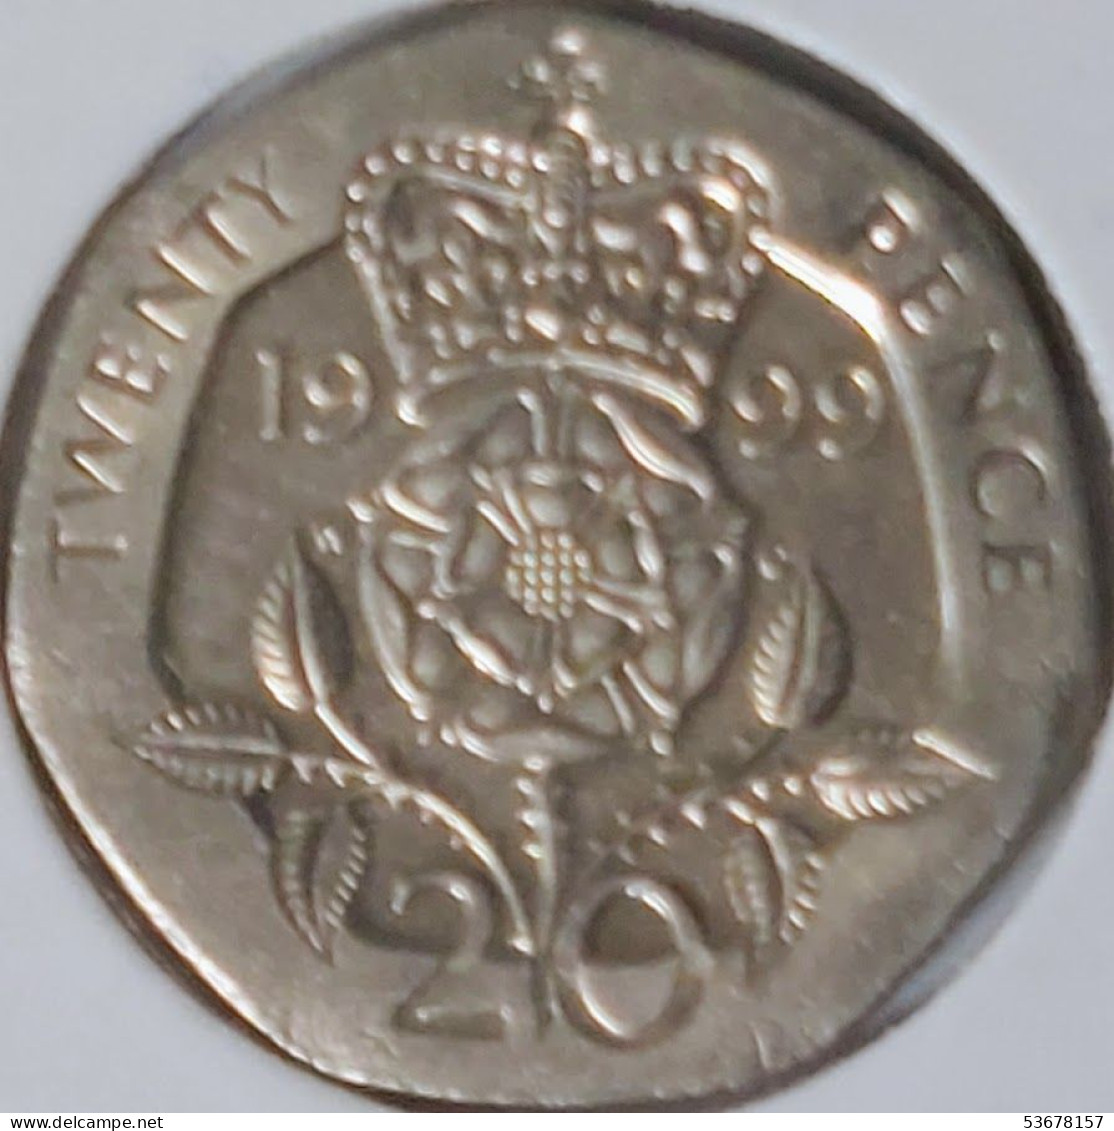 Great Britain - 20 Pence 1999, KM# 990 (#2332) - 20 Pence